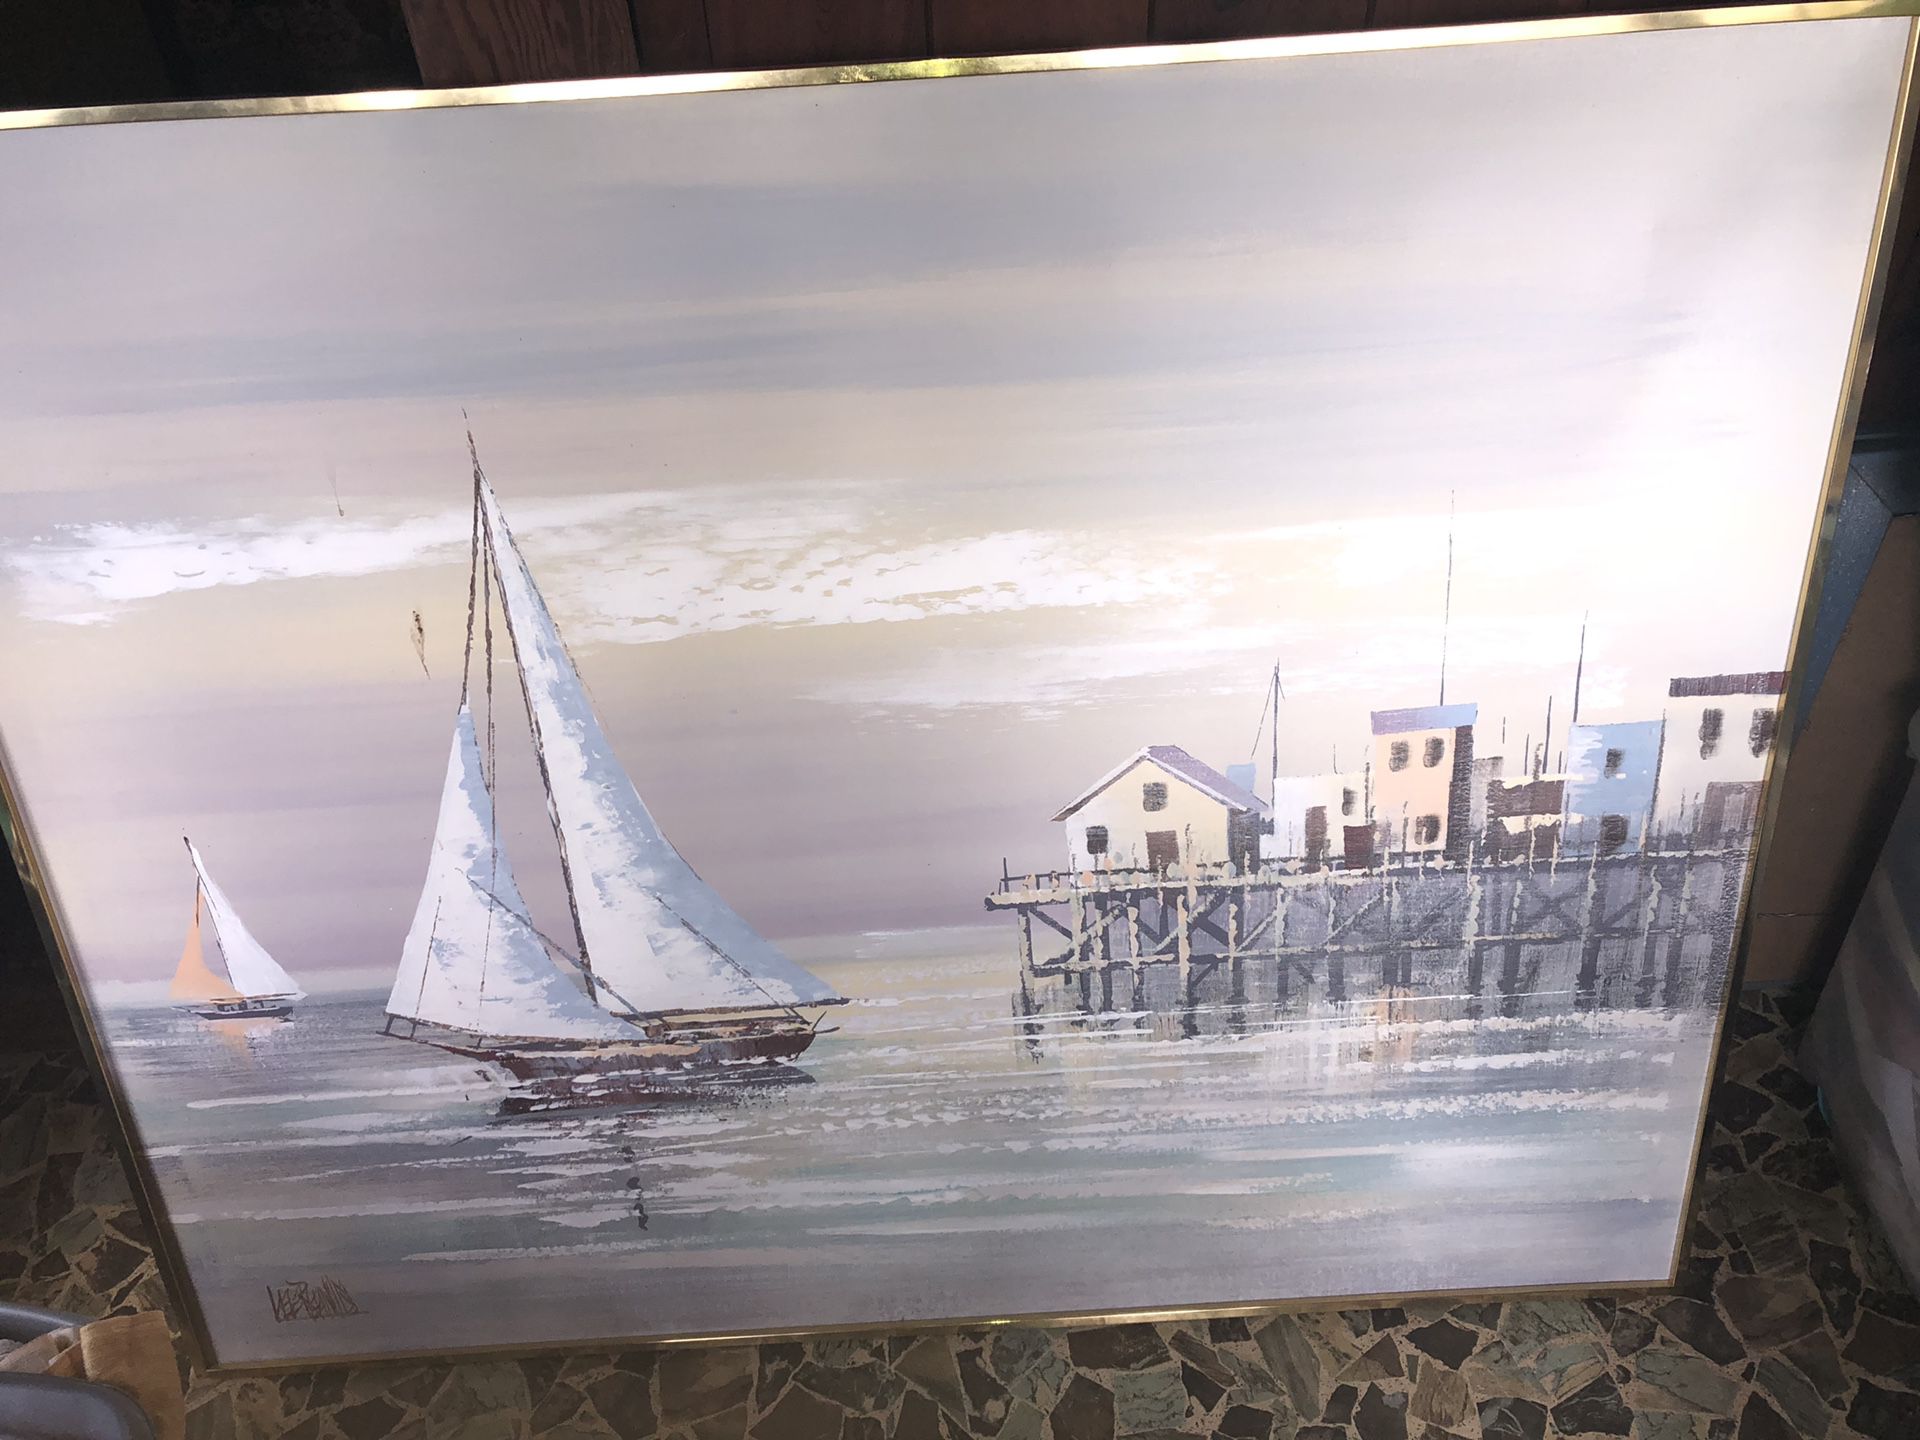 50” x 40” framed hand painted art boating sailing scene Lee Reynolds